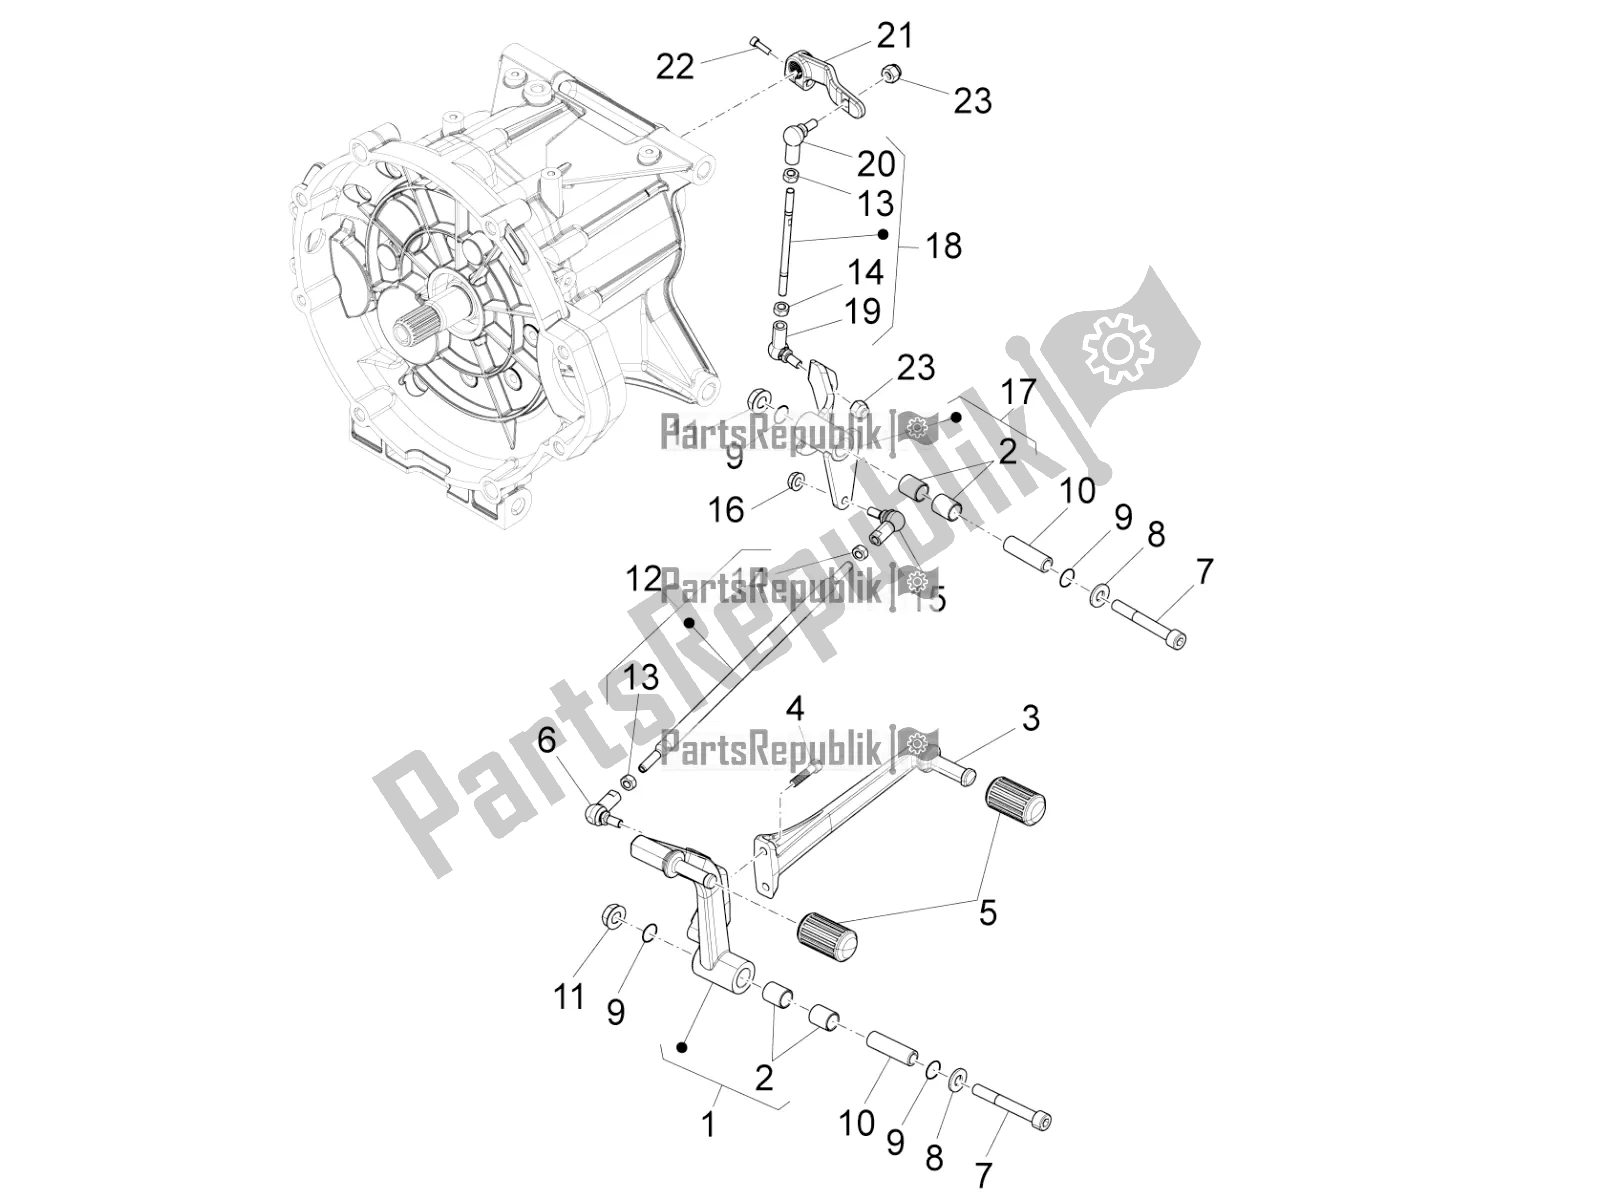 All parts for the Gear Lever of the Moto-Guzzi Eldorado 1400 ABS USA 2021